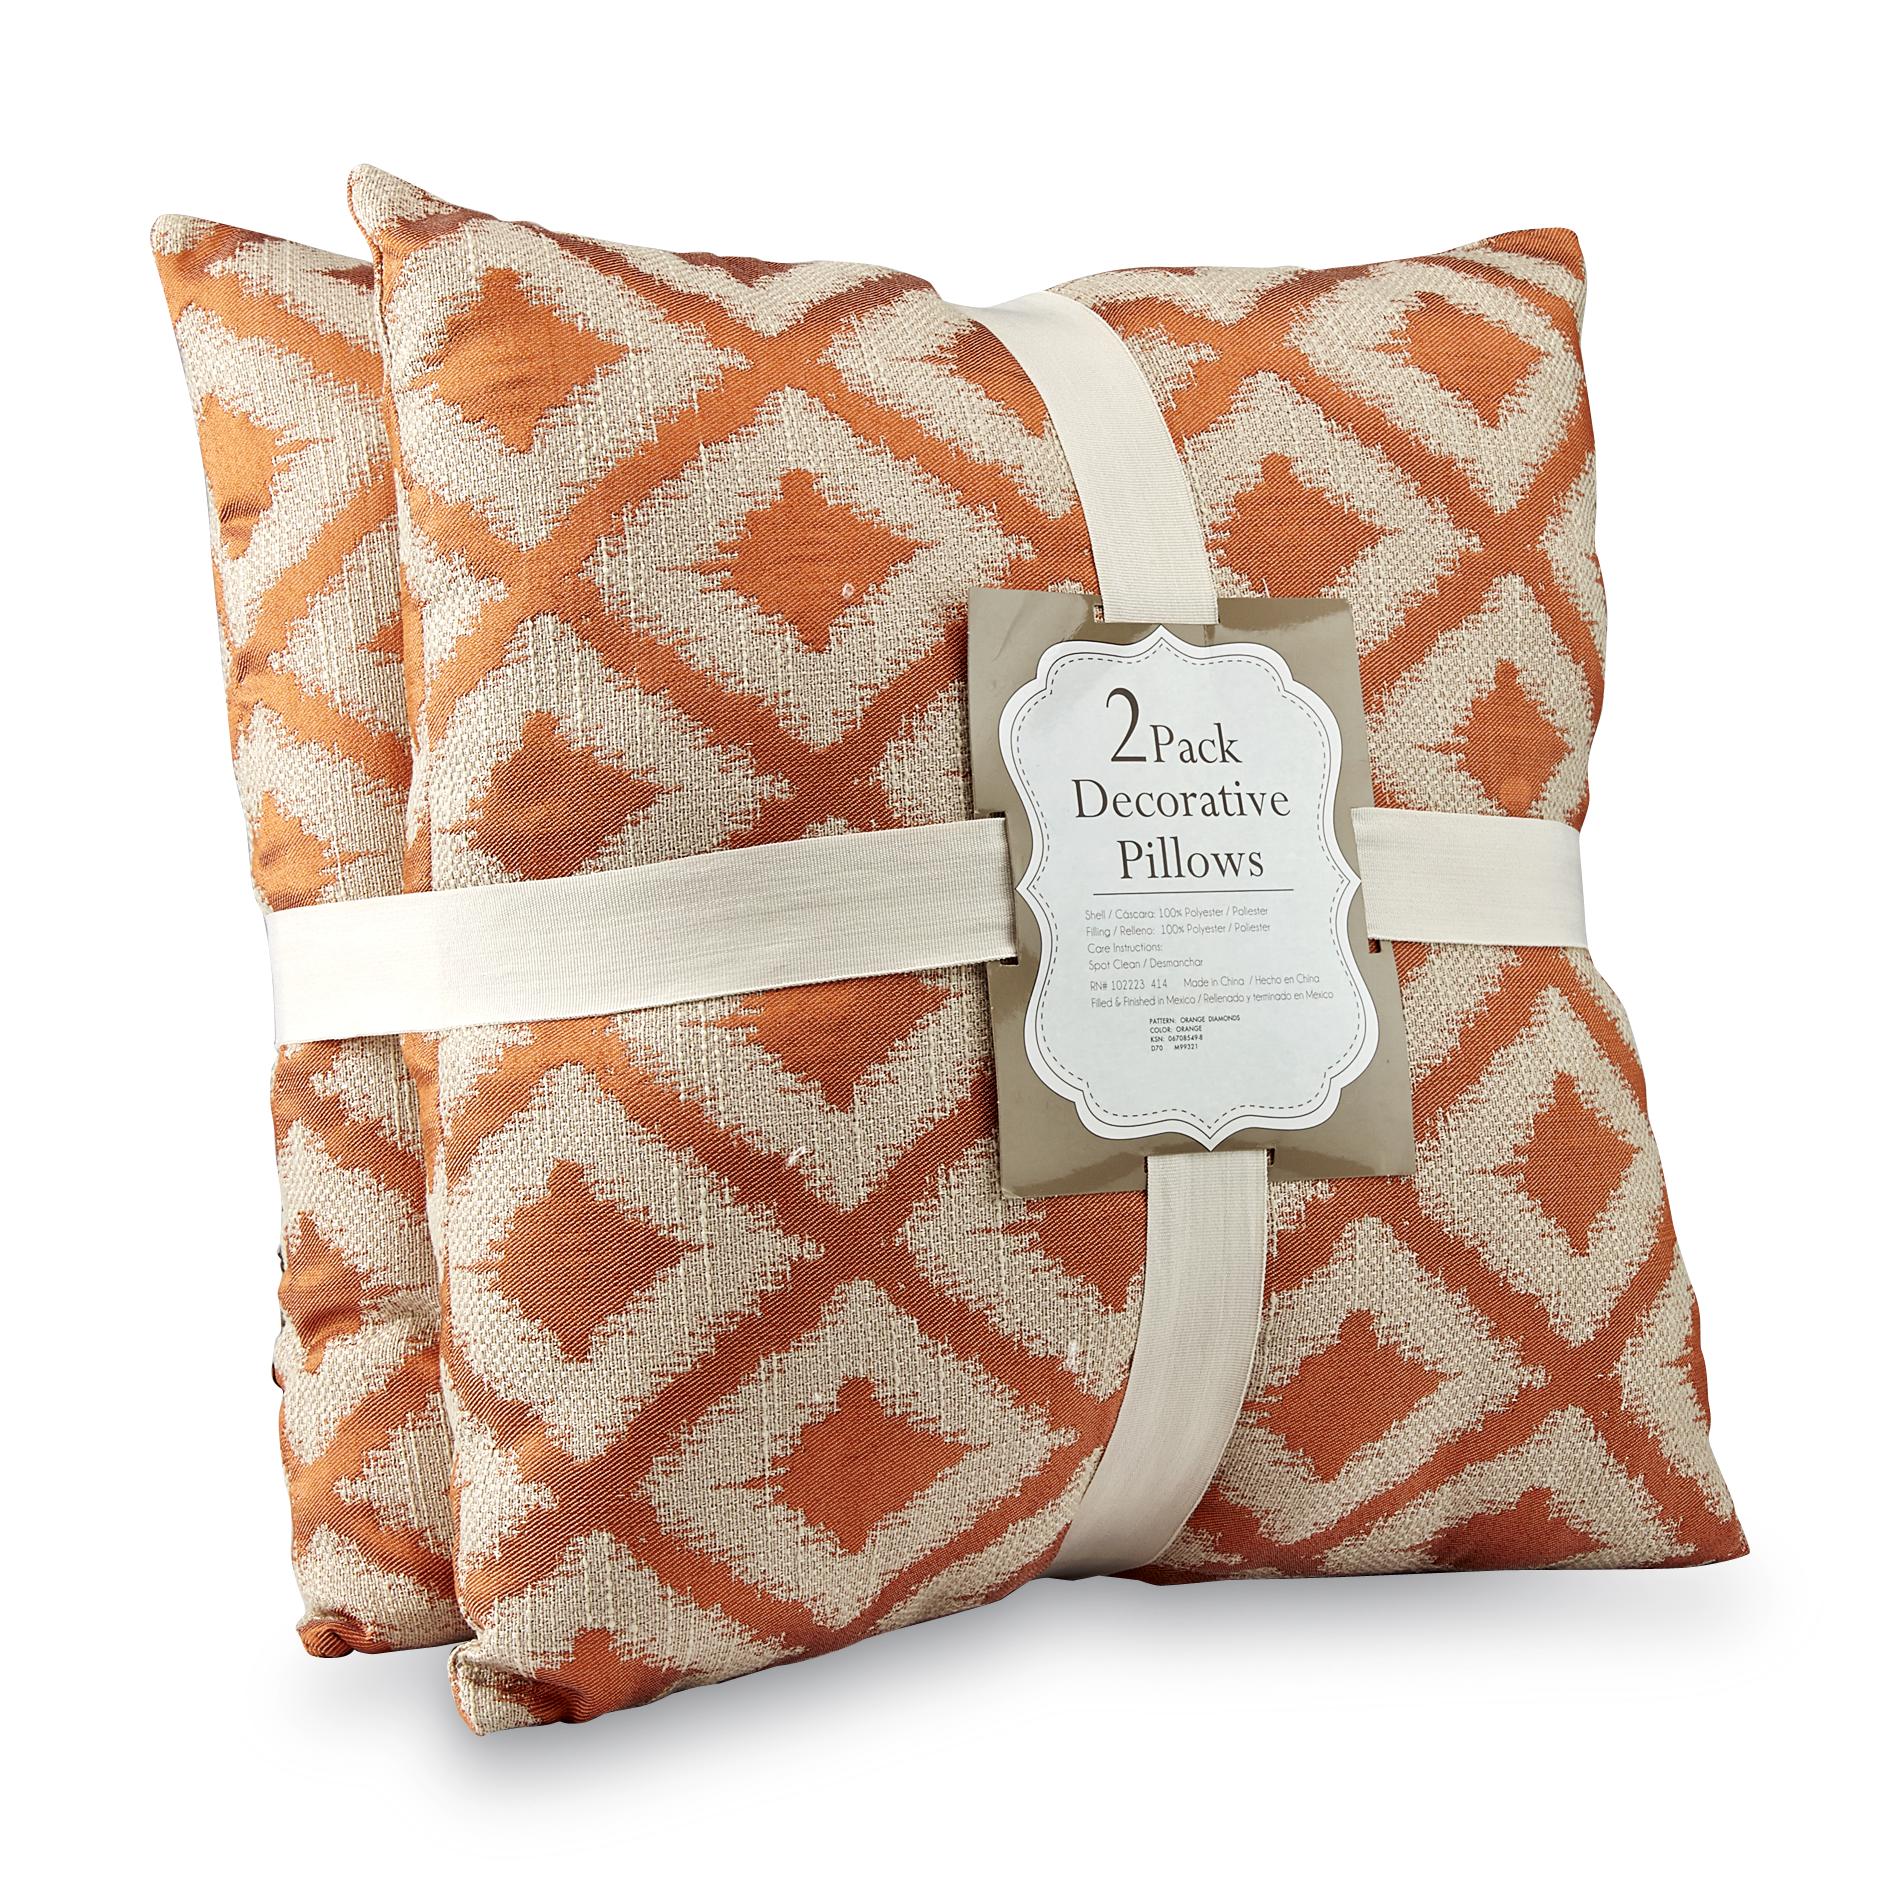 2-Pack Decorative Pillows - Diamond